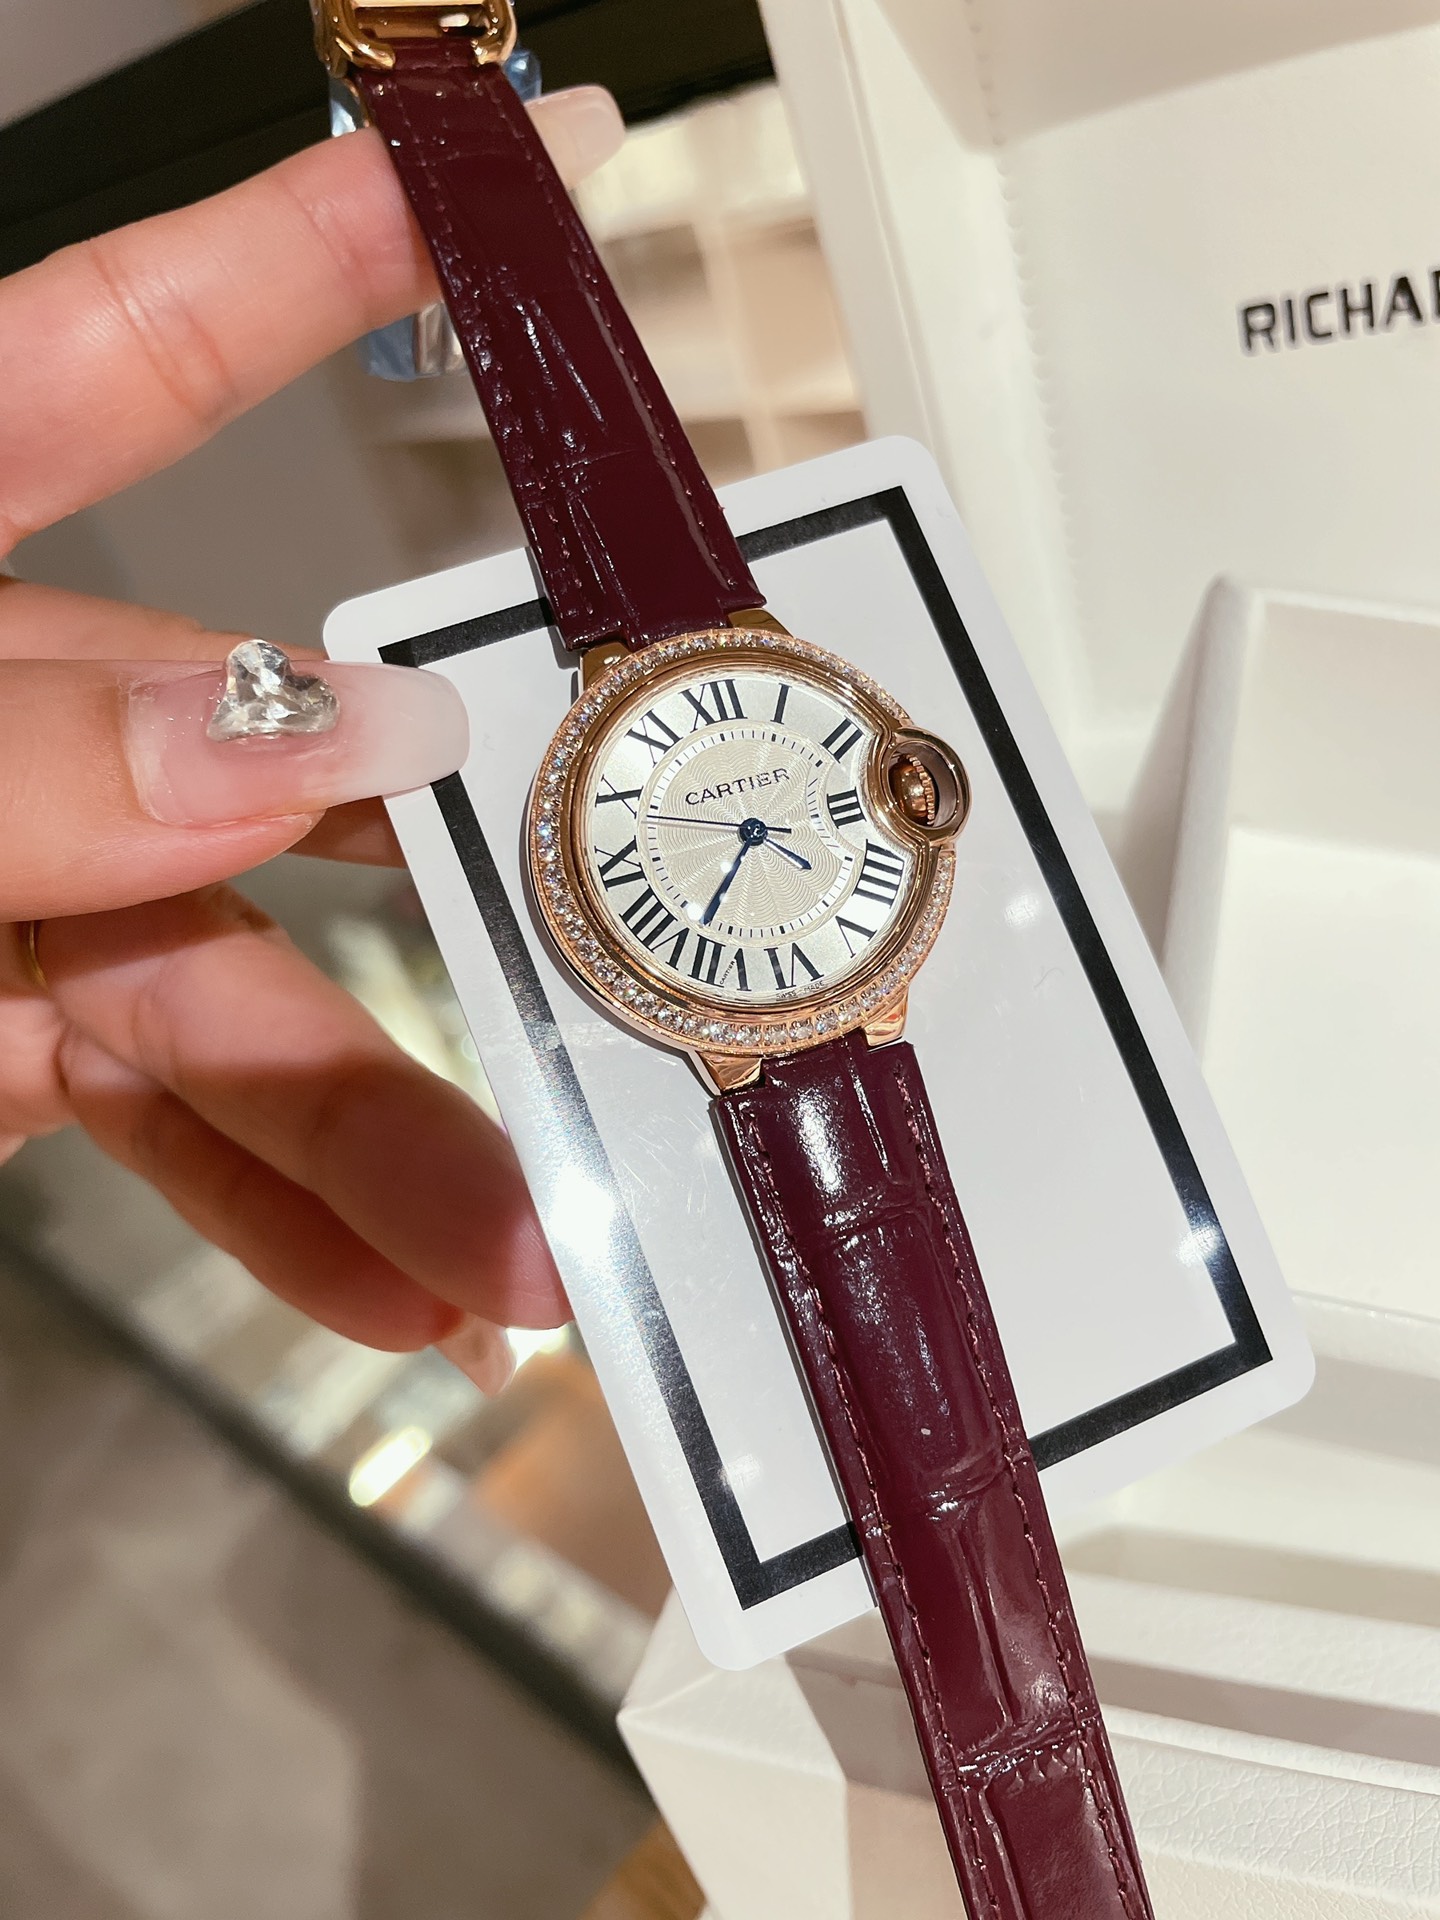 CARTIERカルティエ マレーシアｎ級品 フランス 薄い腕時計 丸い形 レザー 新商品 限定品 レッド_6